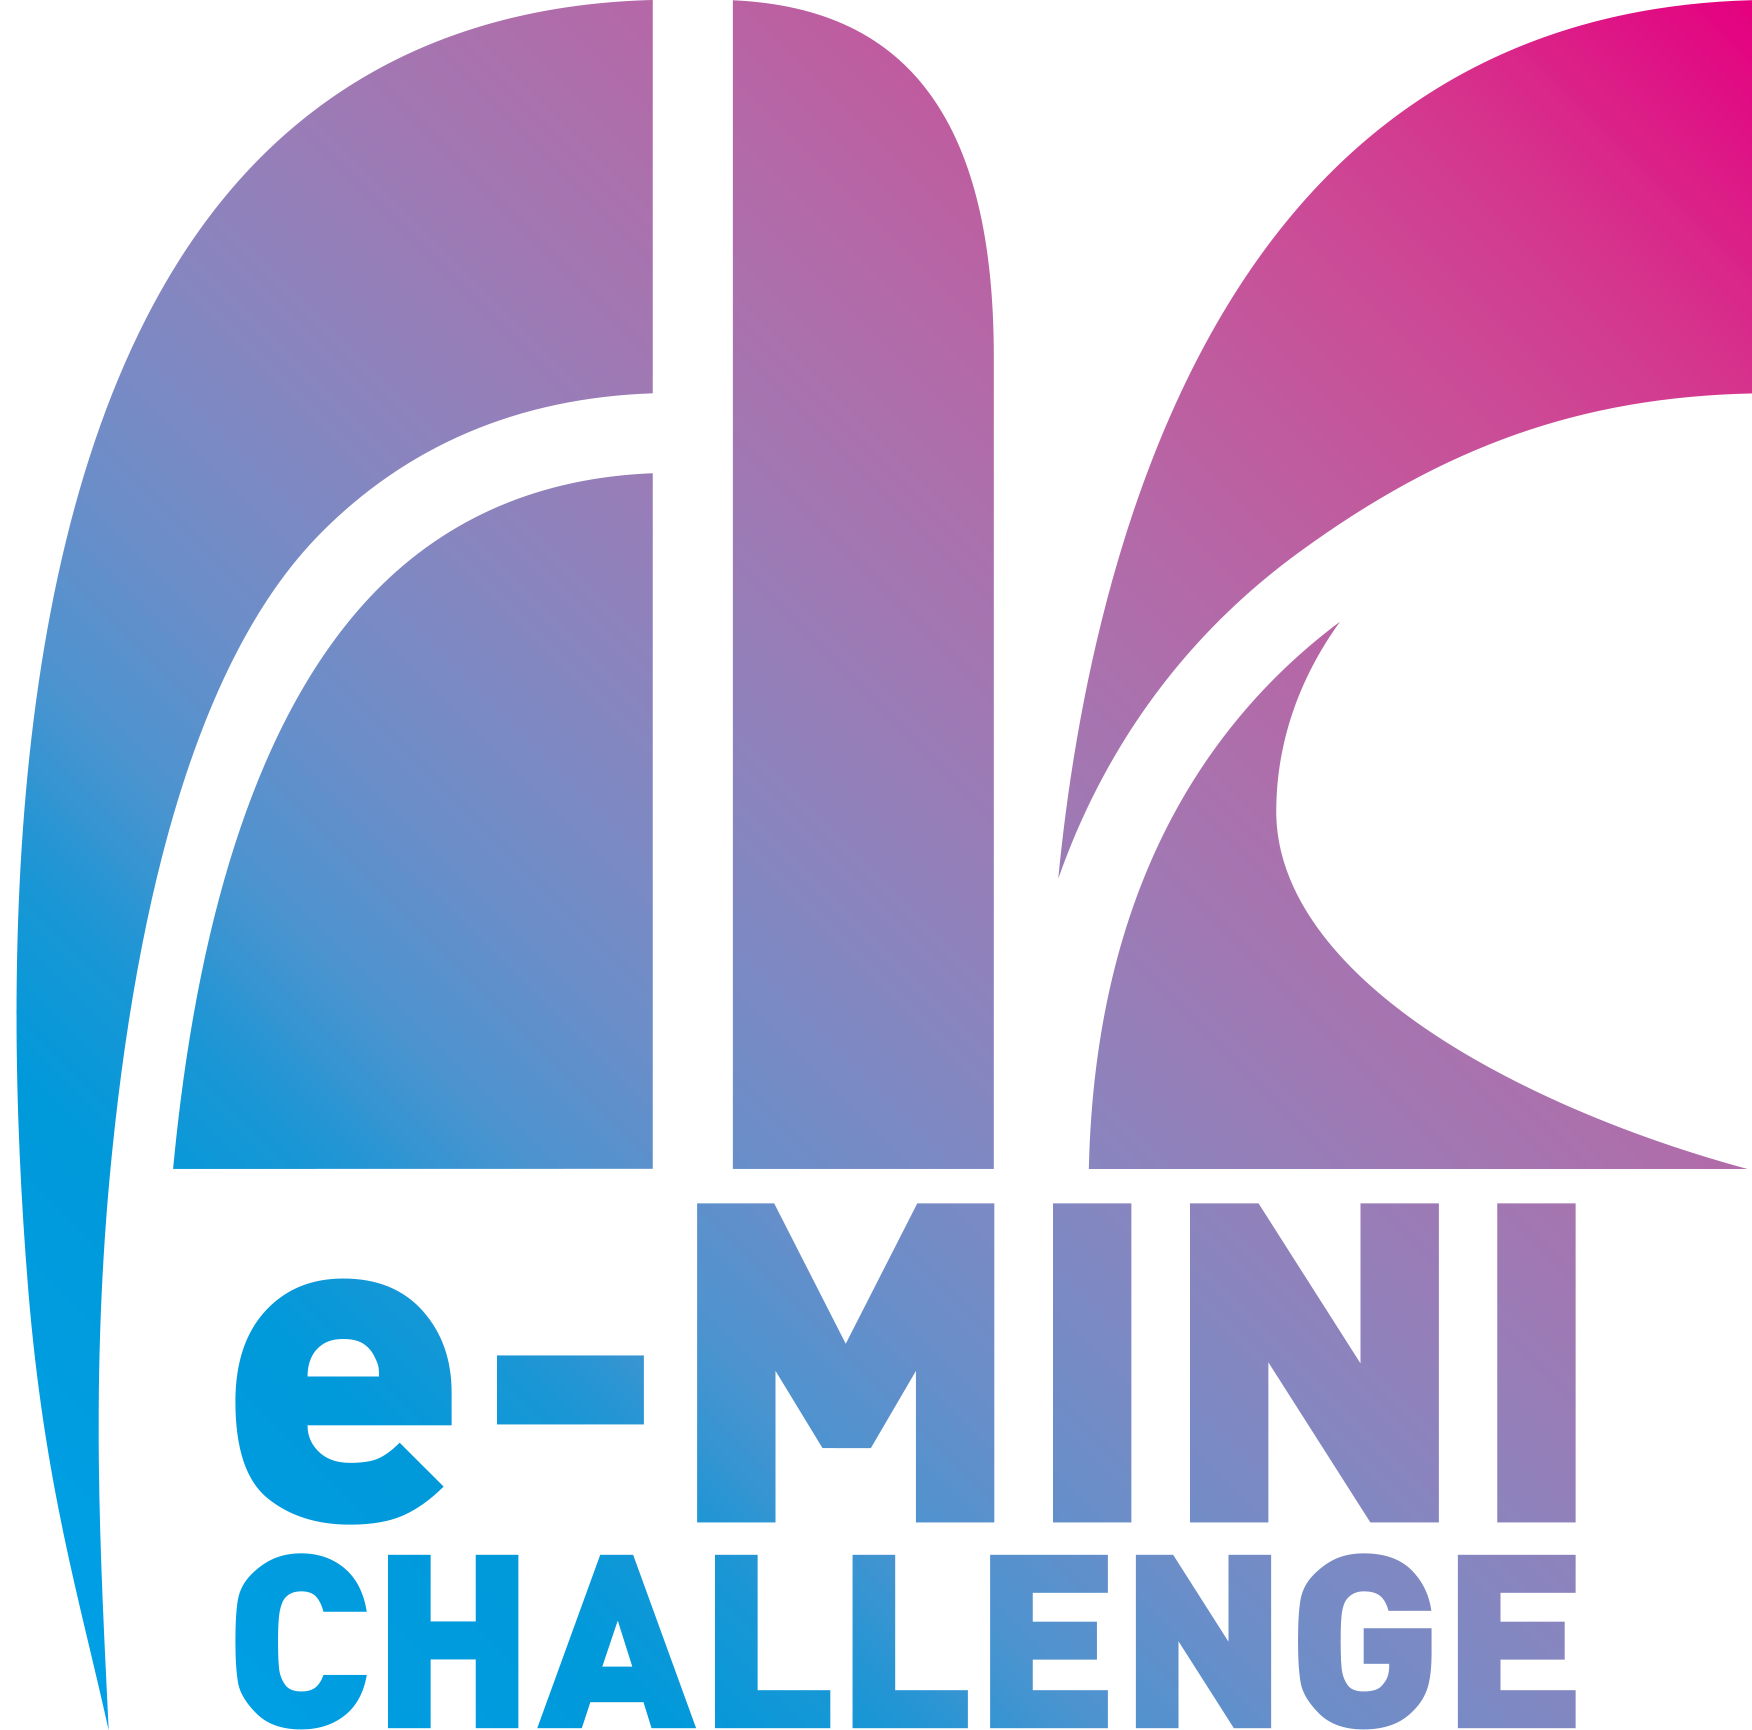 e-MINI CHALLENGE® 2021 S2 Rd.7 A/B ポイントランキング公開